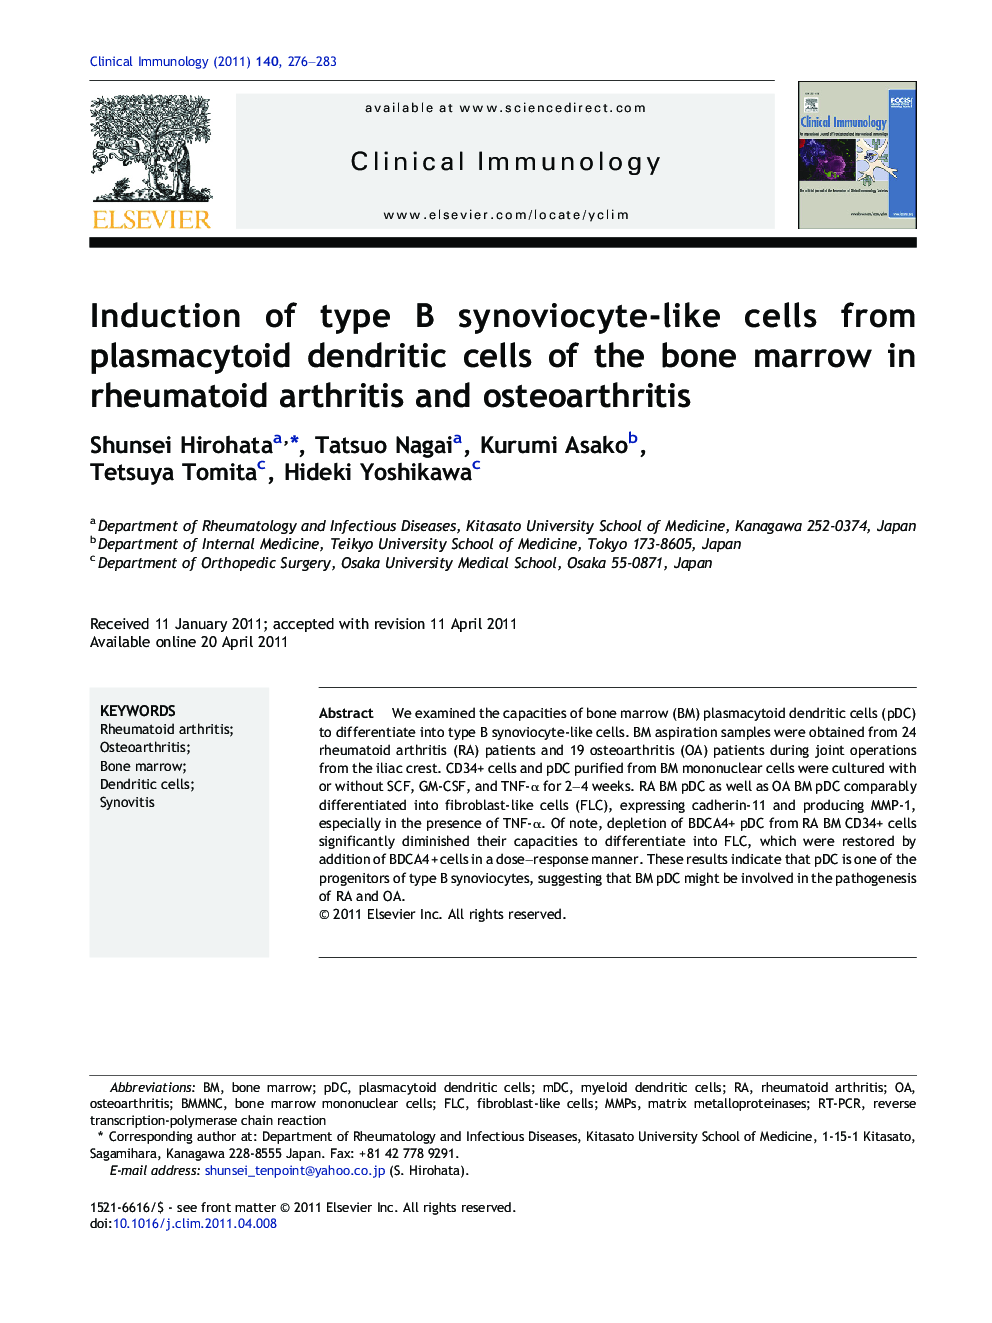 Induction of type B synoviocyte-like cells from plasmacytoid dendritic cells of the bone marrow in rheumatoid arthritis and osteoarthritis